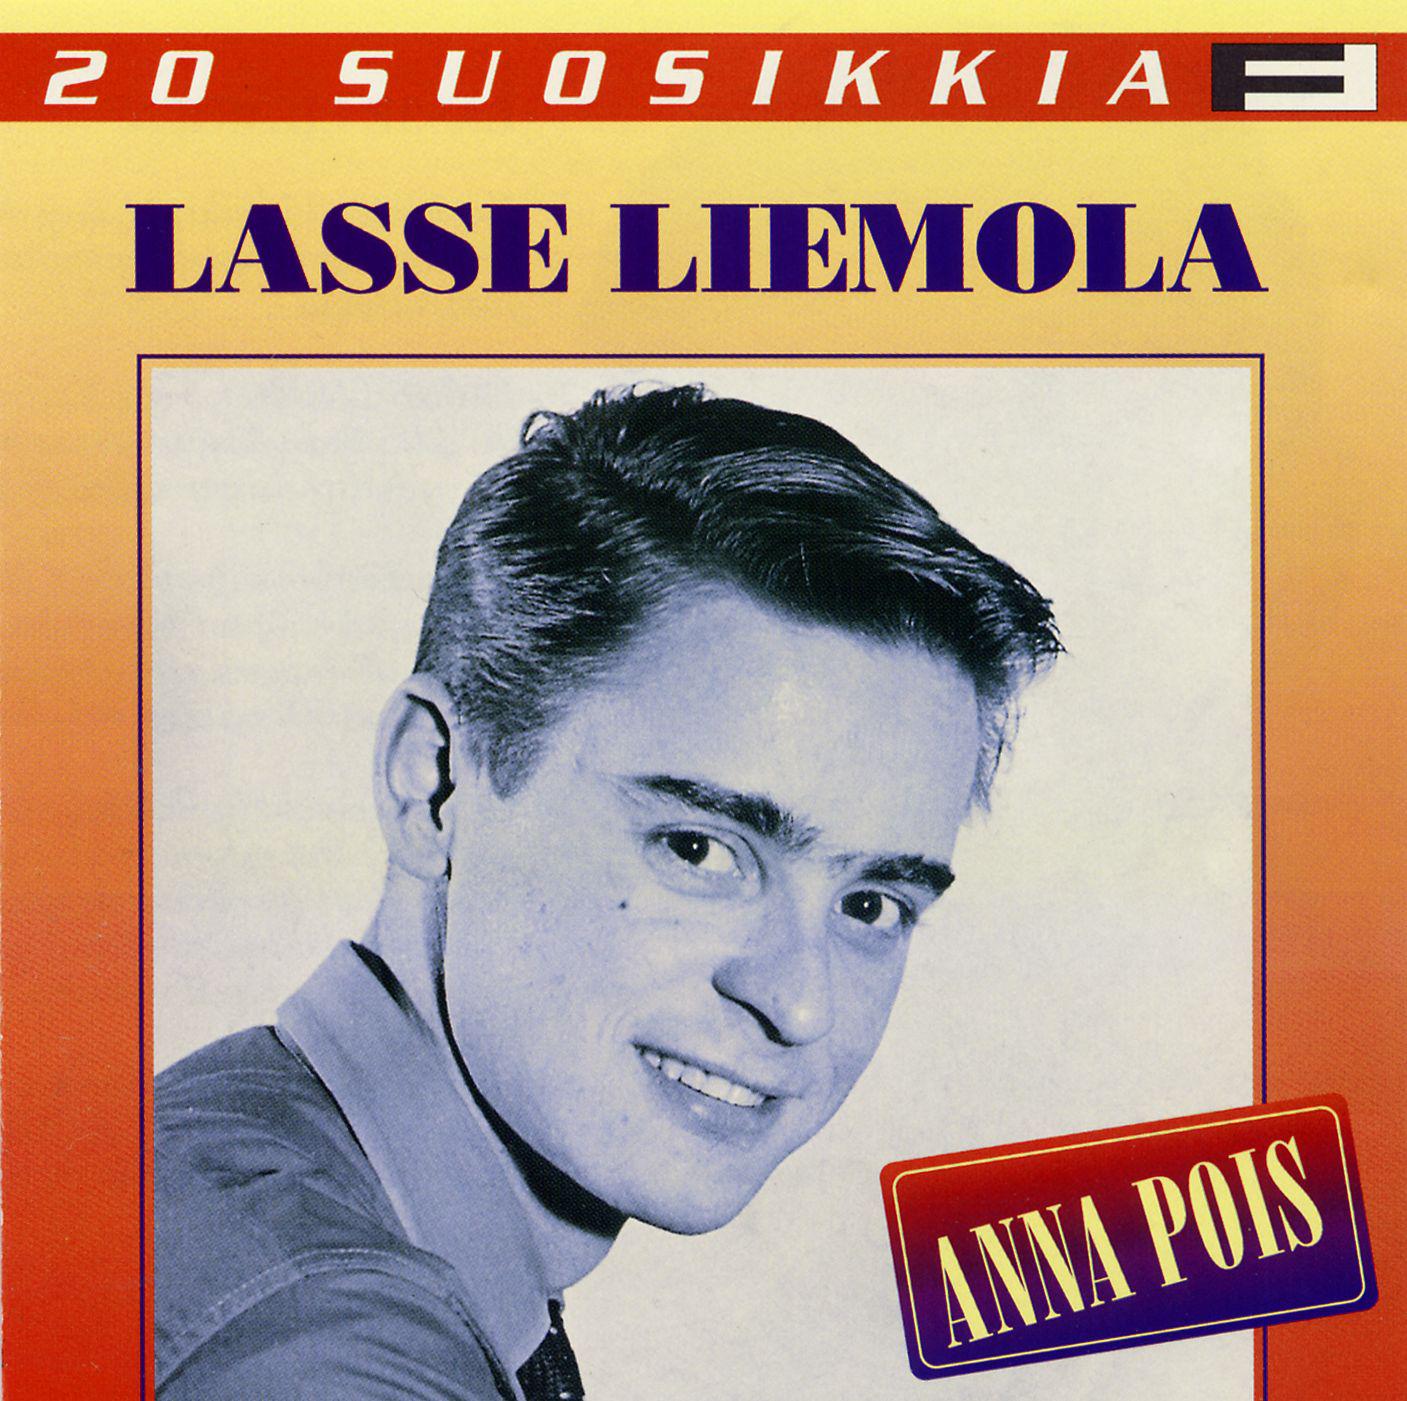 Lasse Liemola - No niin, Mary Lou - Hello Mary Lou